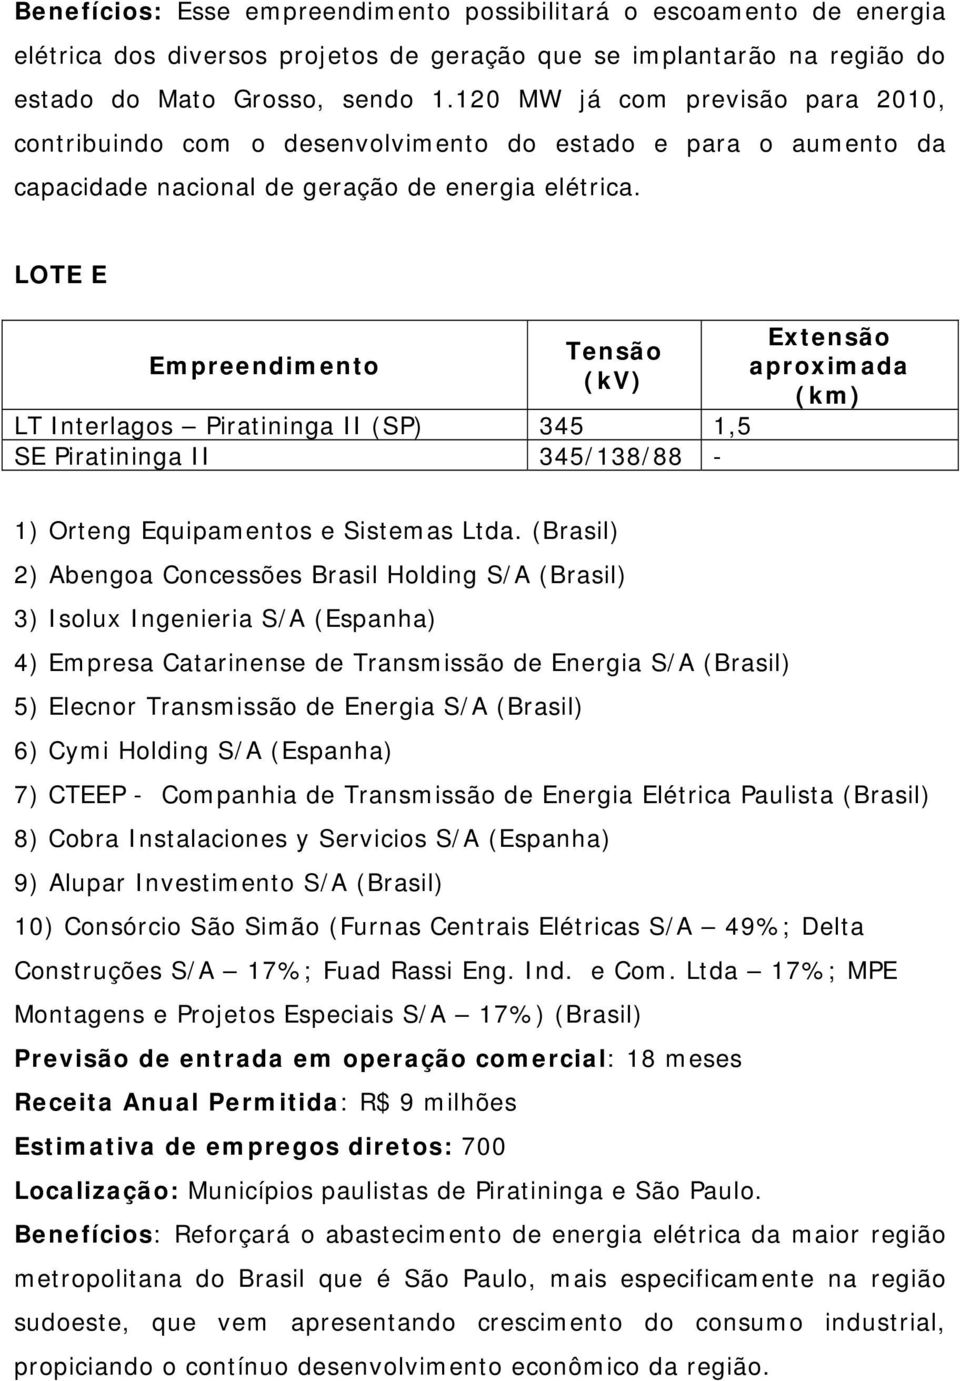 LOTE E LT Interlagos Piratininga II (SP) 345 1,5 SE Piratininga II 345/138/88-2) Abengoa Concessões Brasil Holding S/A (Brasil) 3) Isolux Ingenieria S/A (Espanha) 4) Empresa Catarinense de